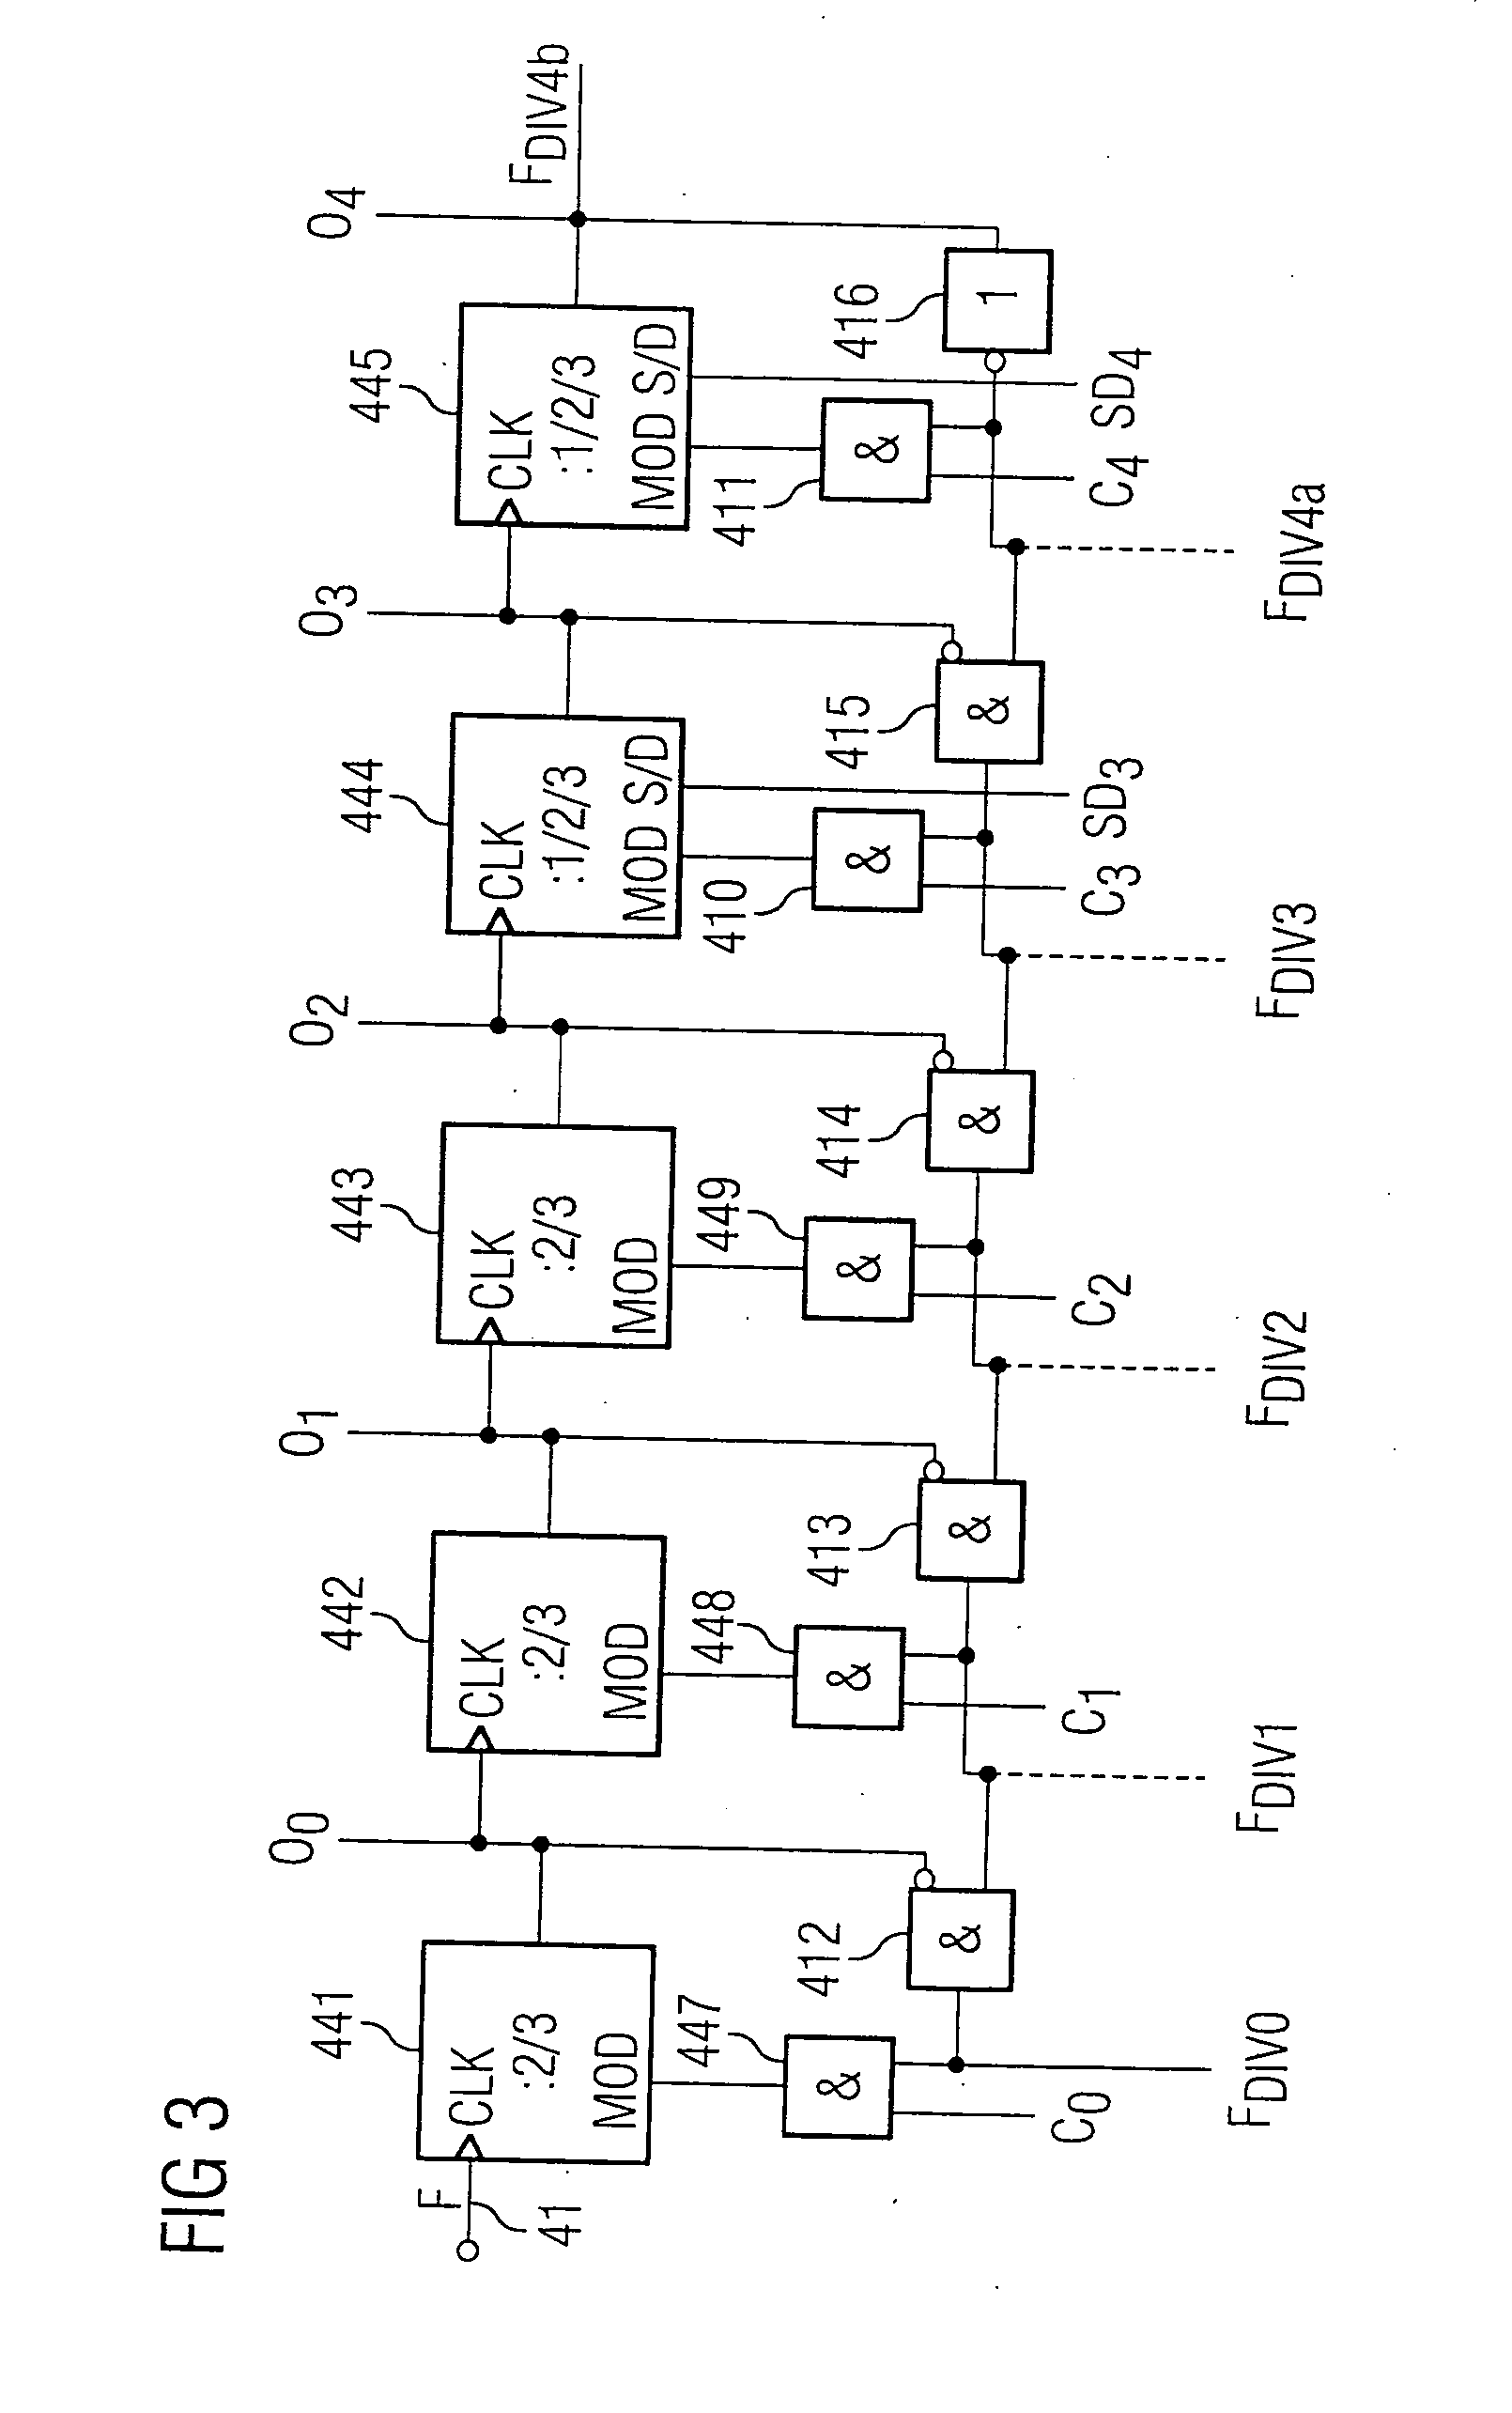 Digital phase locked loop, method for controlling a digital phase locked loop and method for generating an oscillator signal